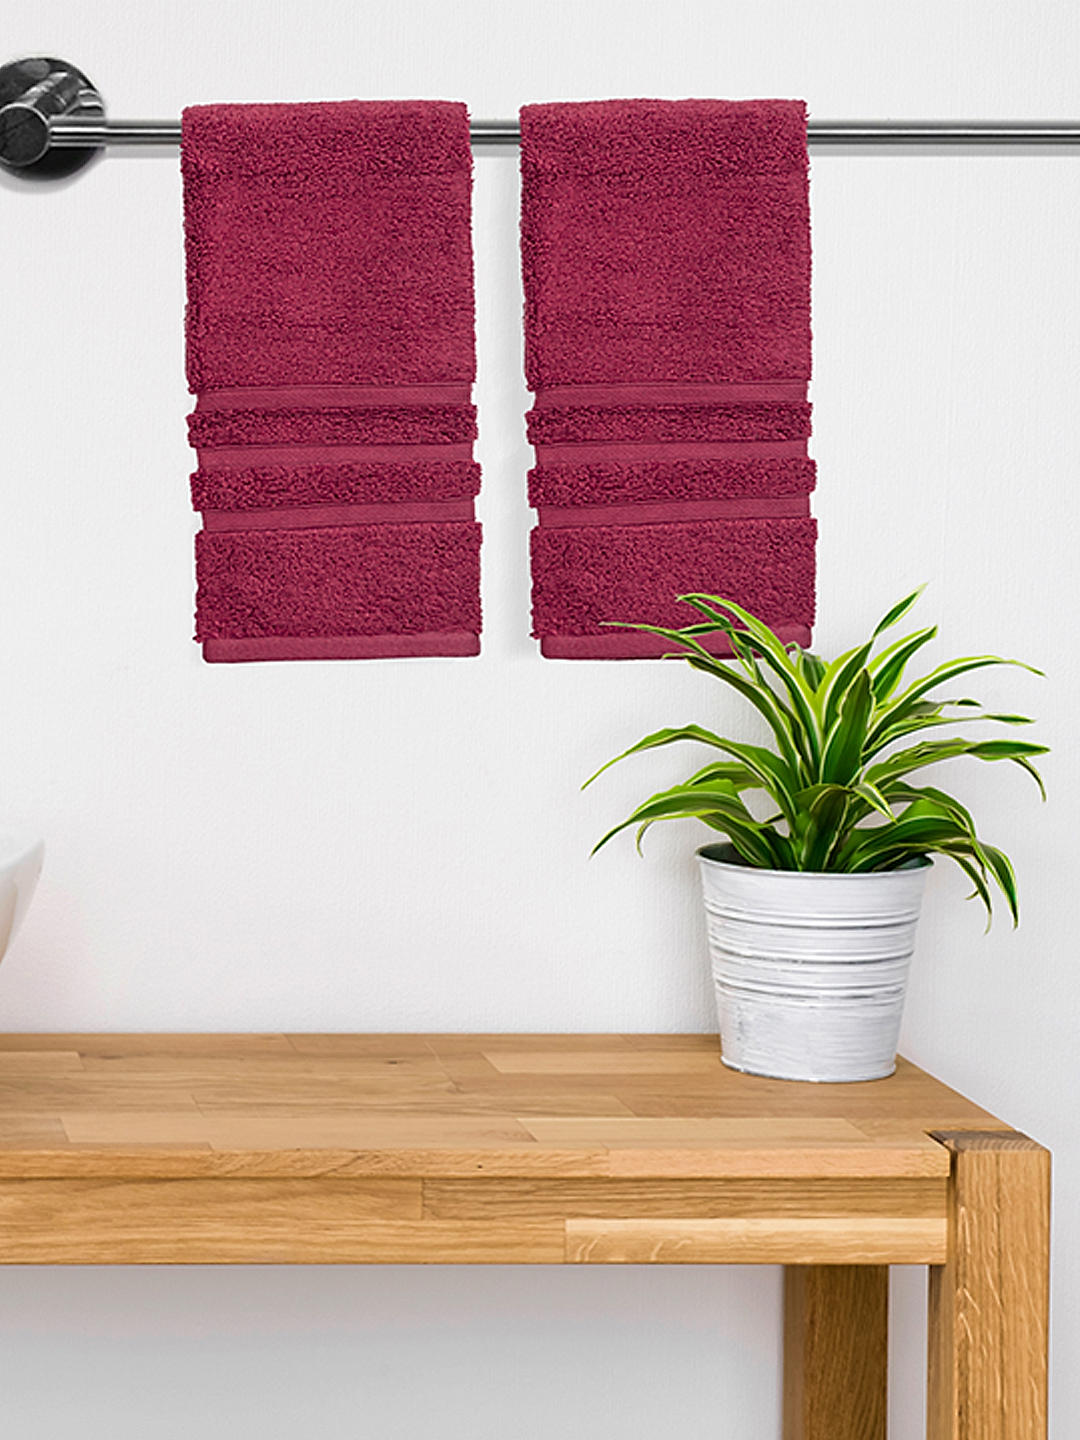 Kalpavriksha 550 gsm 100% Organic Cotton Soft & Fluffy Maroon Colored Hand Towel